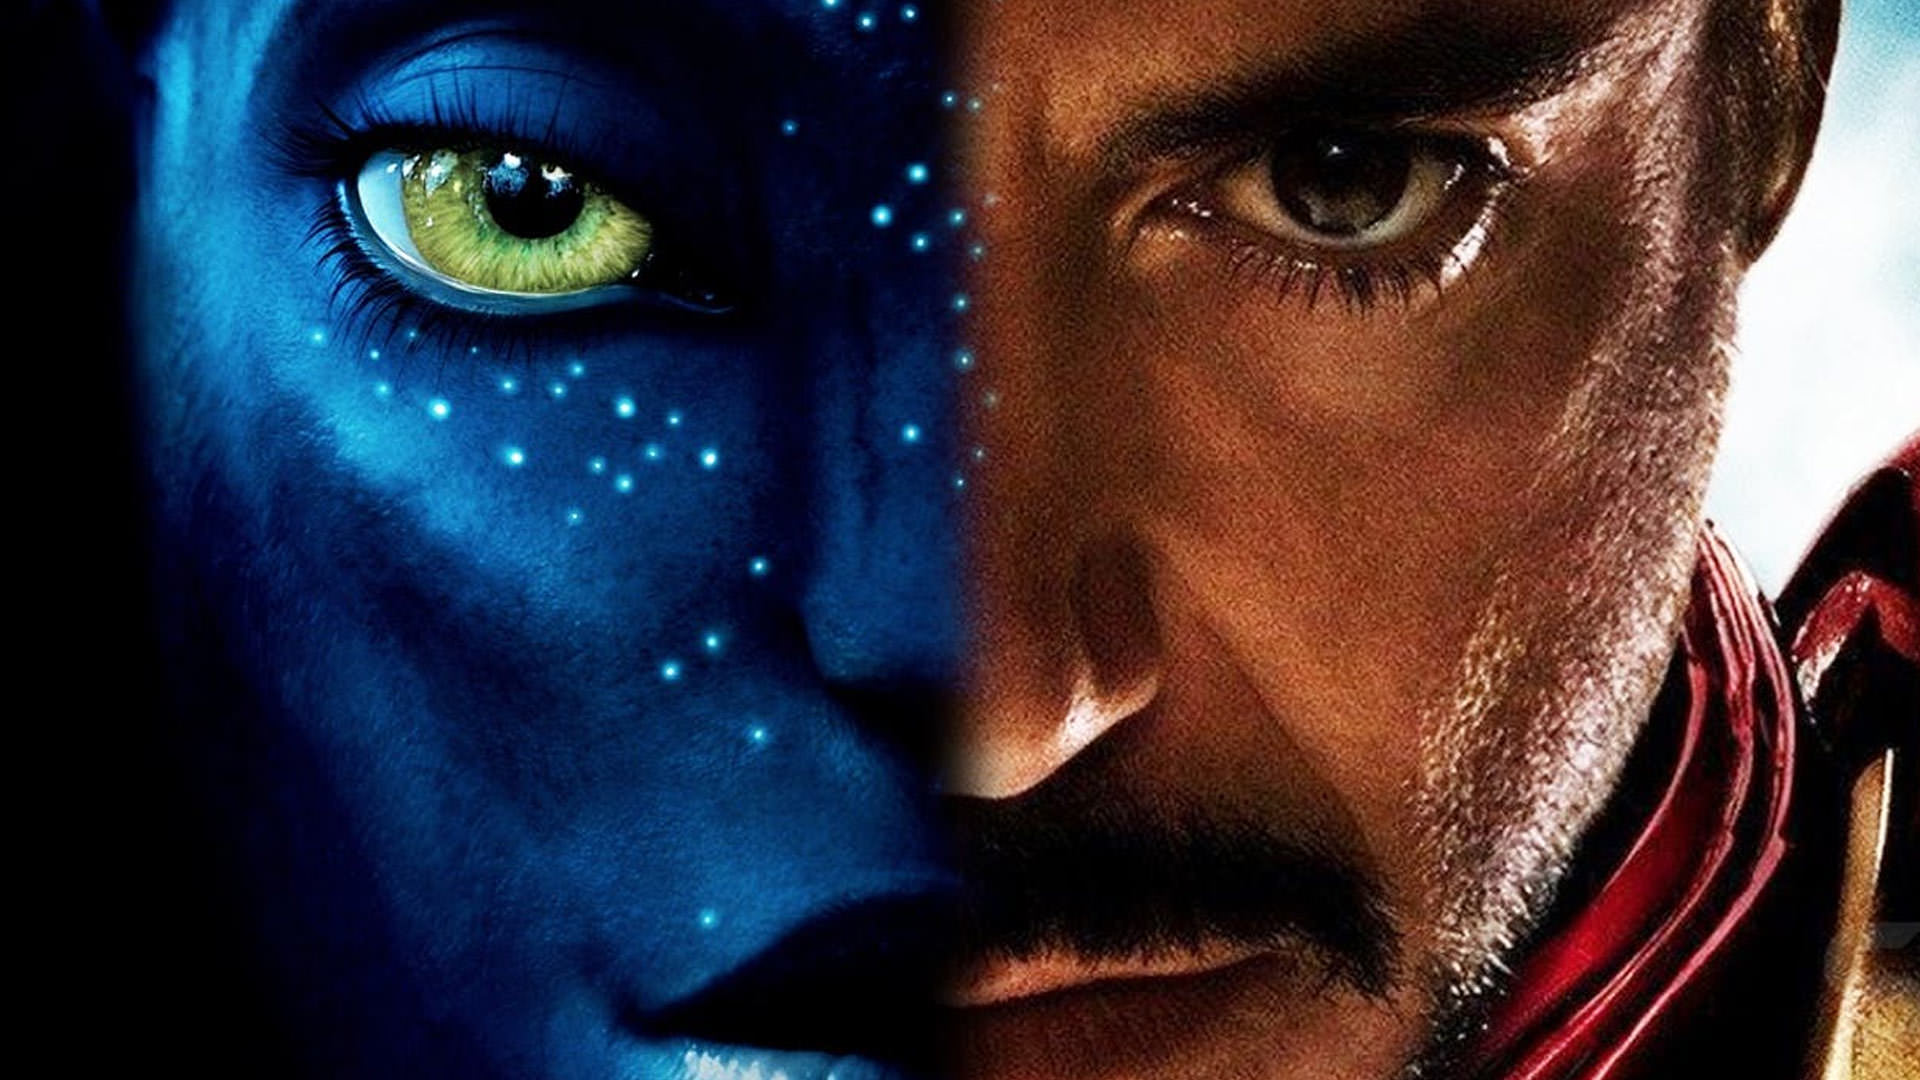  Avatar دوباره پرفروش ترین فیلم تاریخ شد؛ شکست Avengers: Endgame